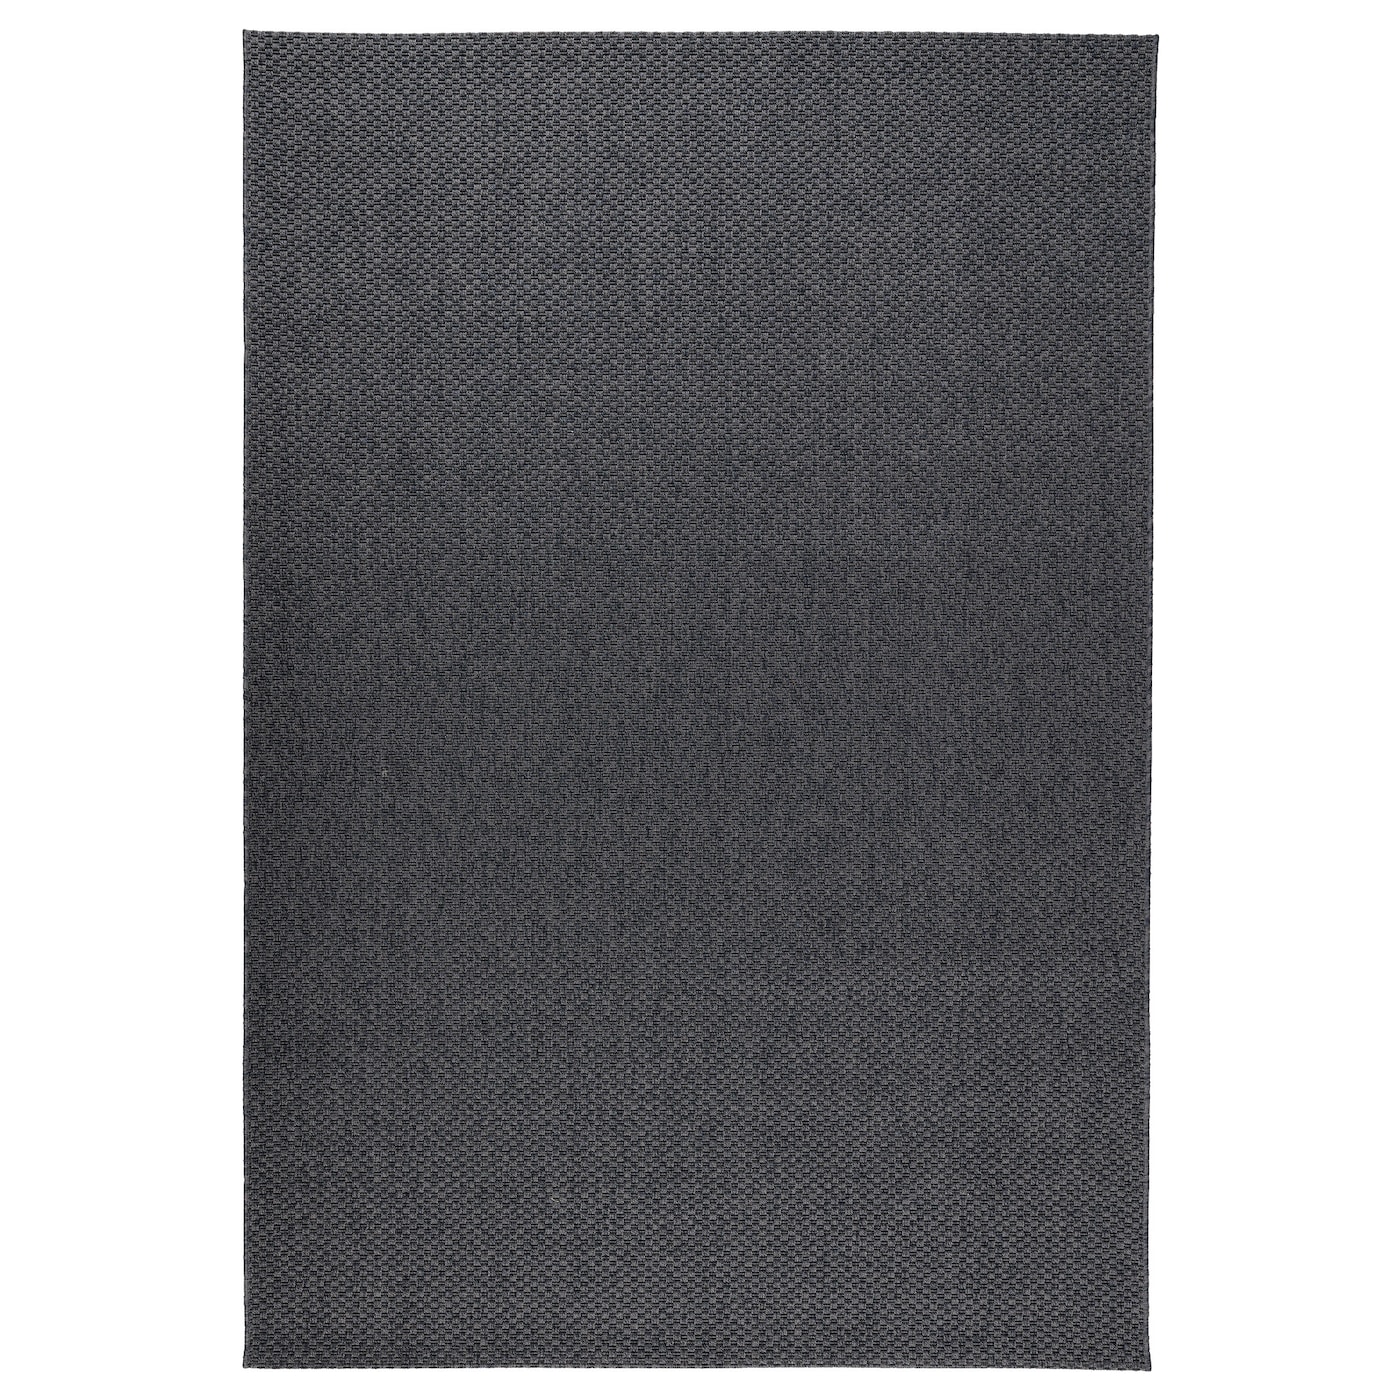 Ковер Ikea Morum, темно-серый, 200x300 см